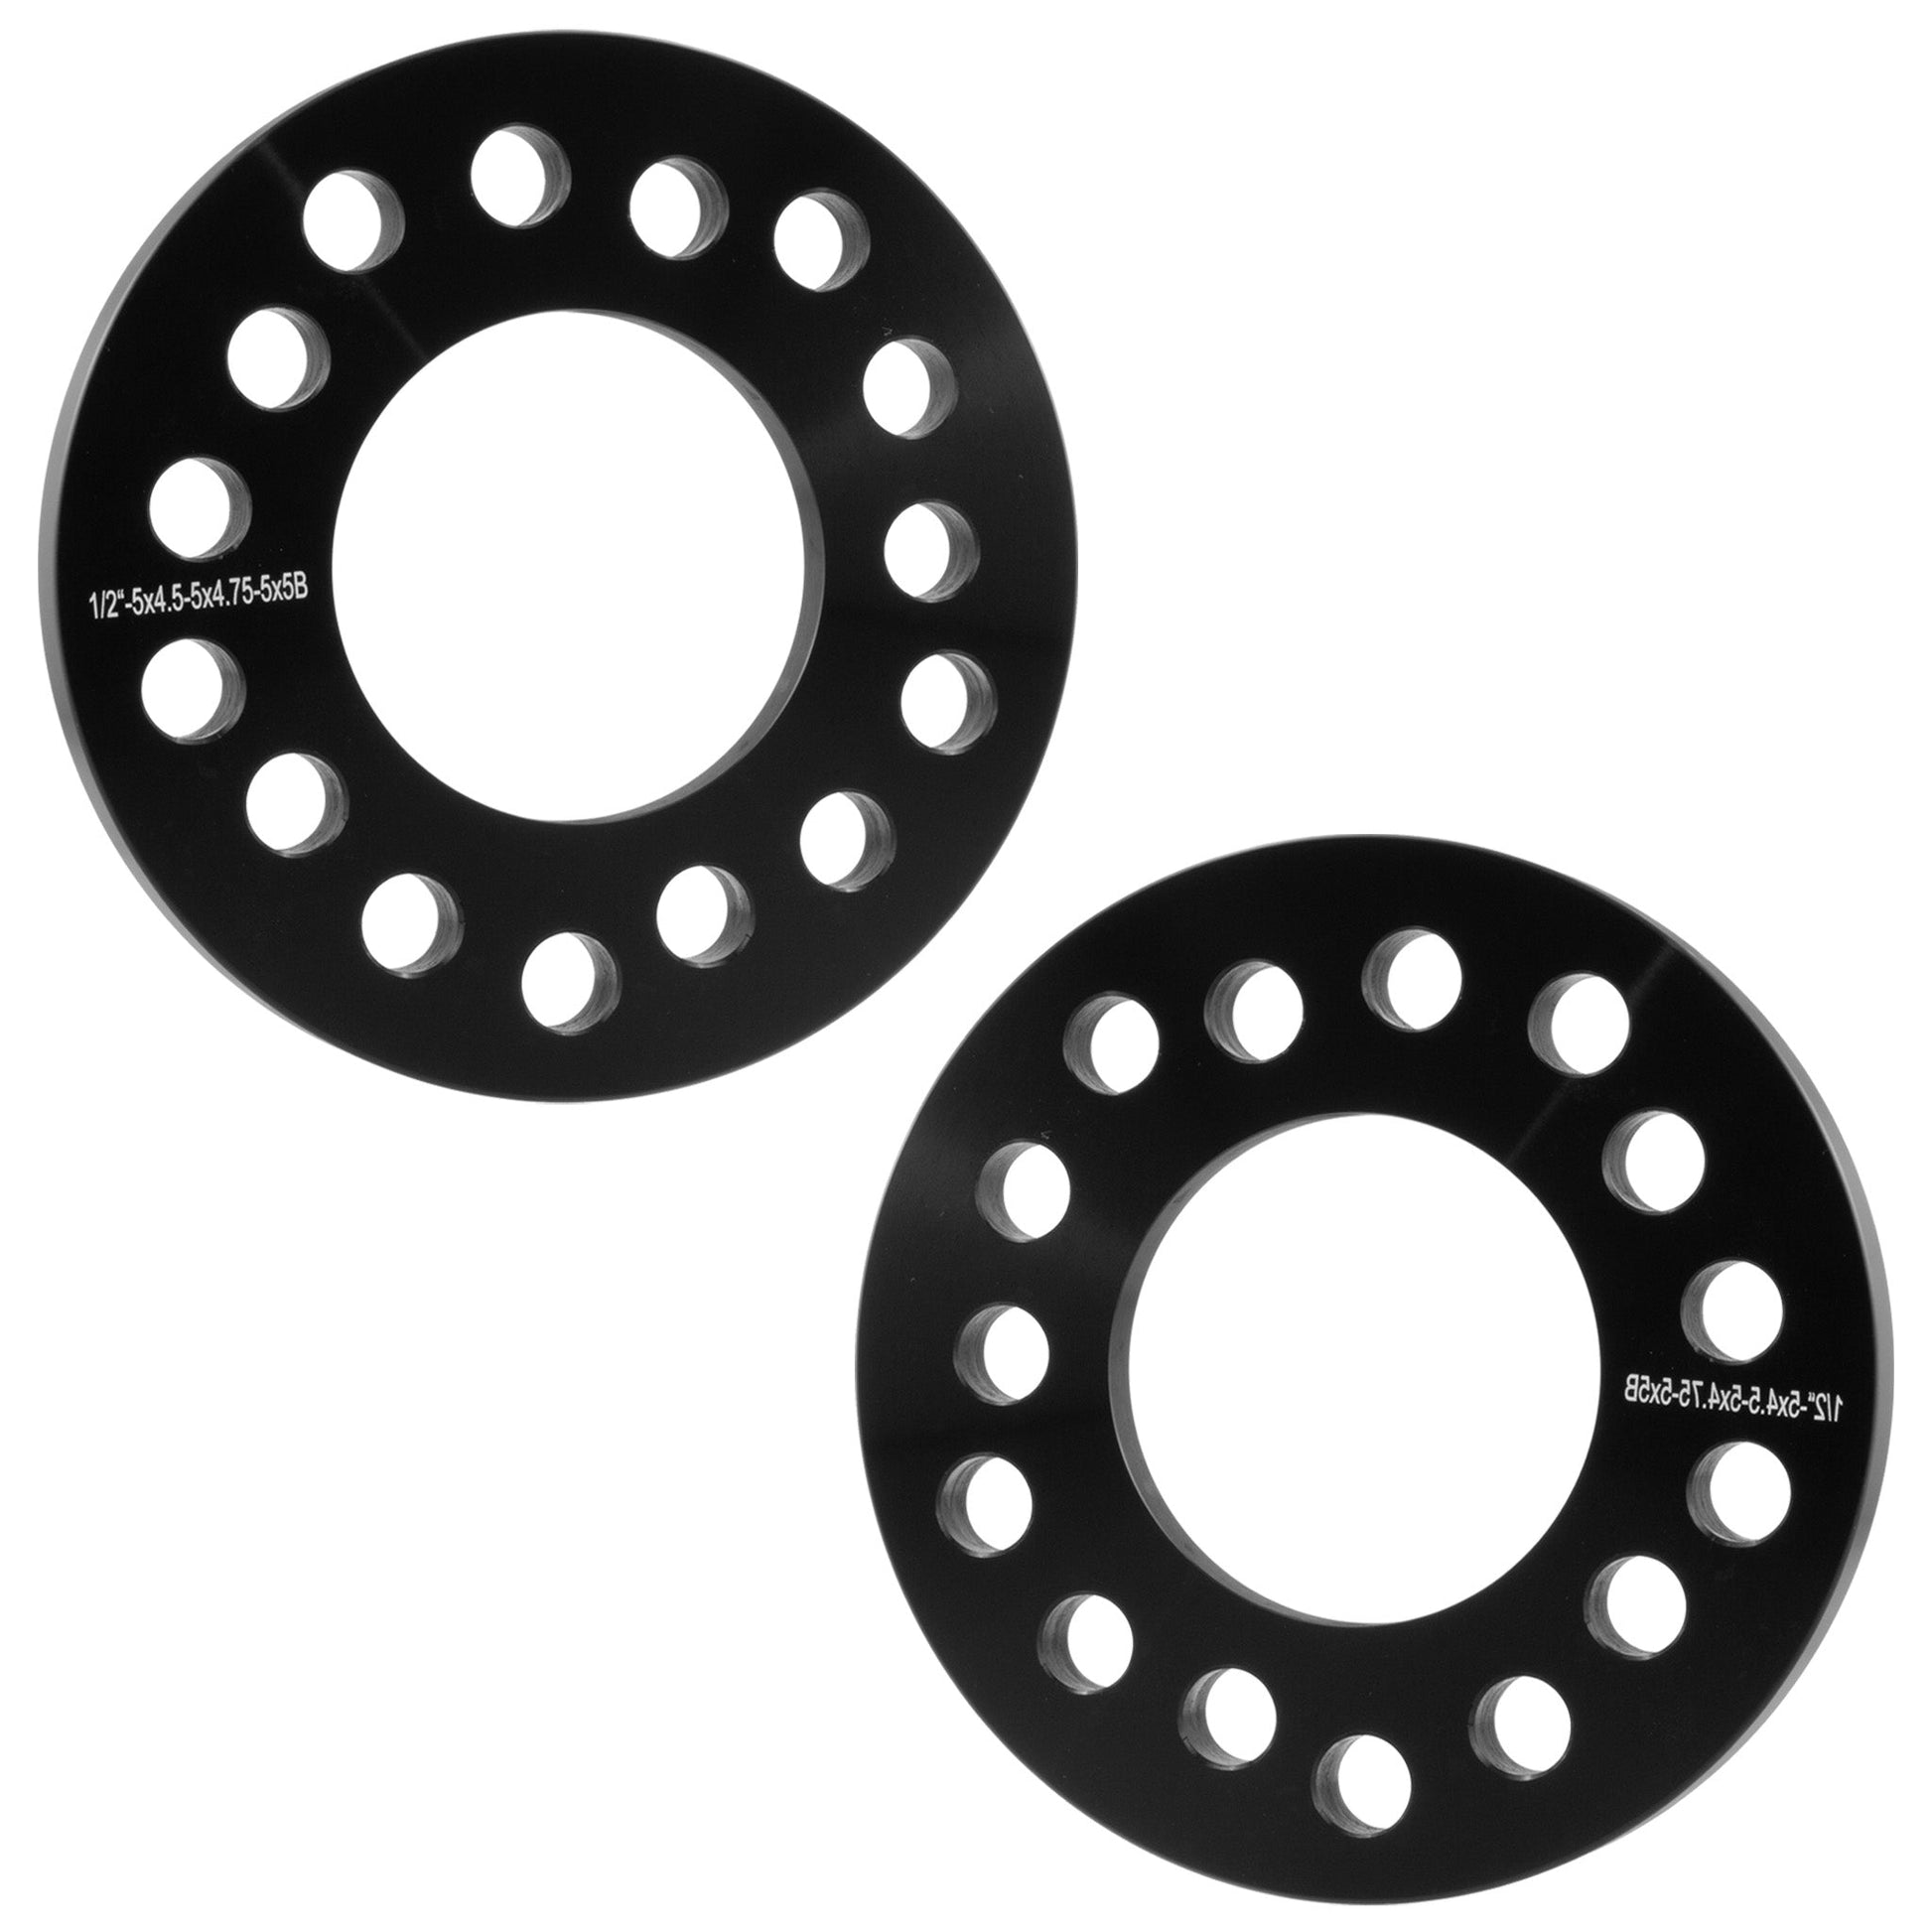 3/4" Inch Titan 5 Lug Billet Aluminum Wheel Spacers | Universal 5x4.5, 5x4.75 & 5x5 | Titan Wheel Accessories